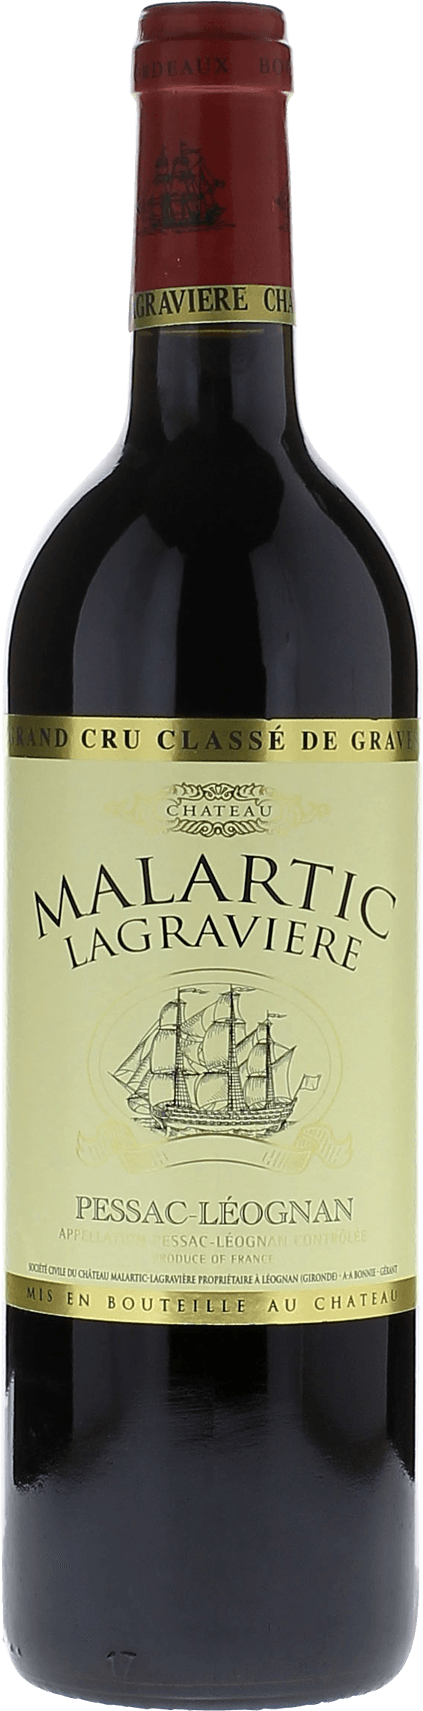 Malartic lagraviere rouge 2020 Grand Cru Class Graves, Bordeaux rouge